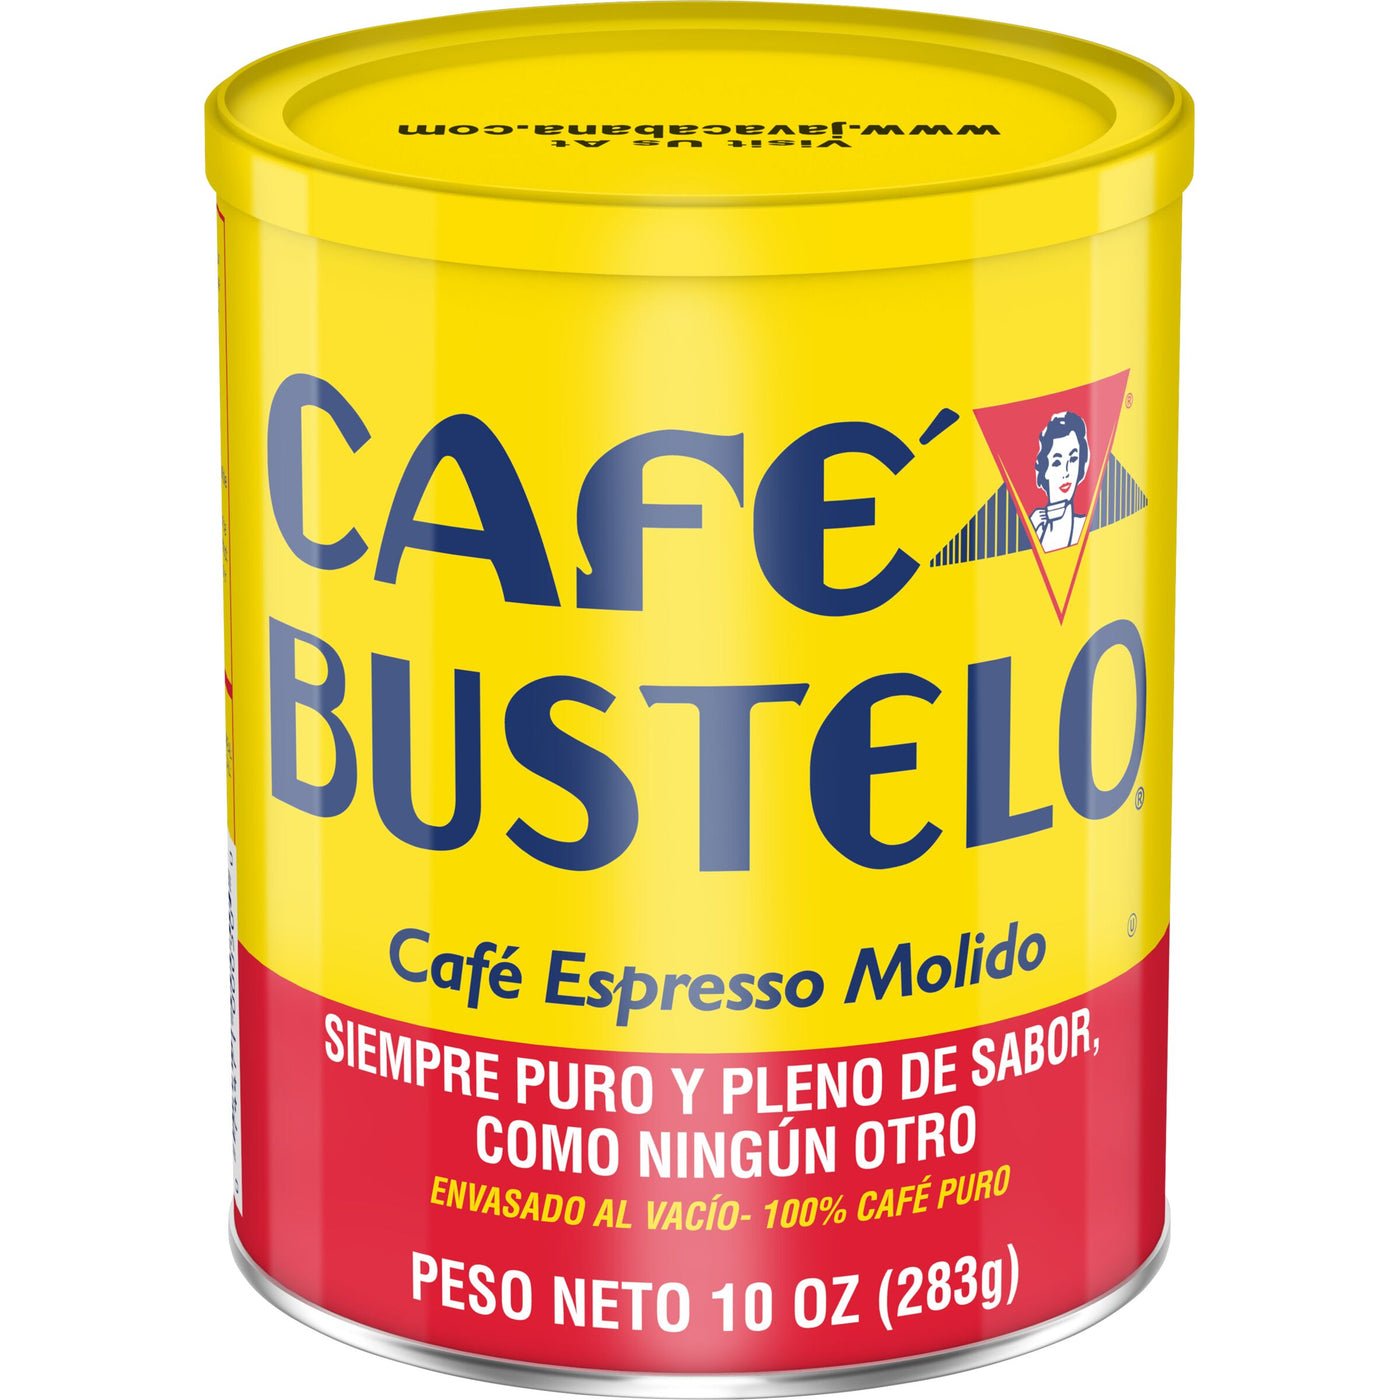 Cafe Bustelo Espresso Style Dark Roast, Ground Coffee Can, 10 oz